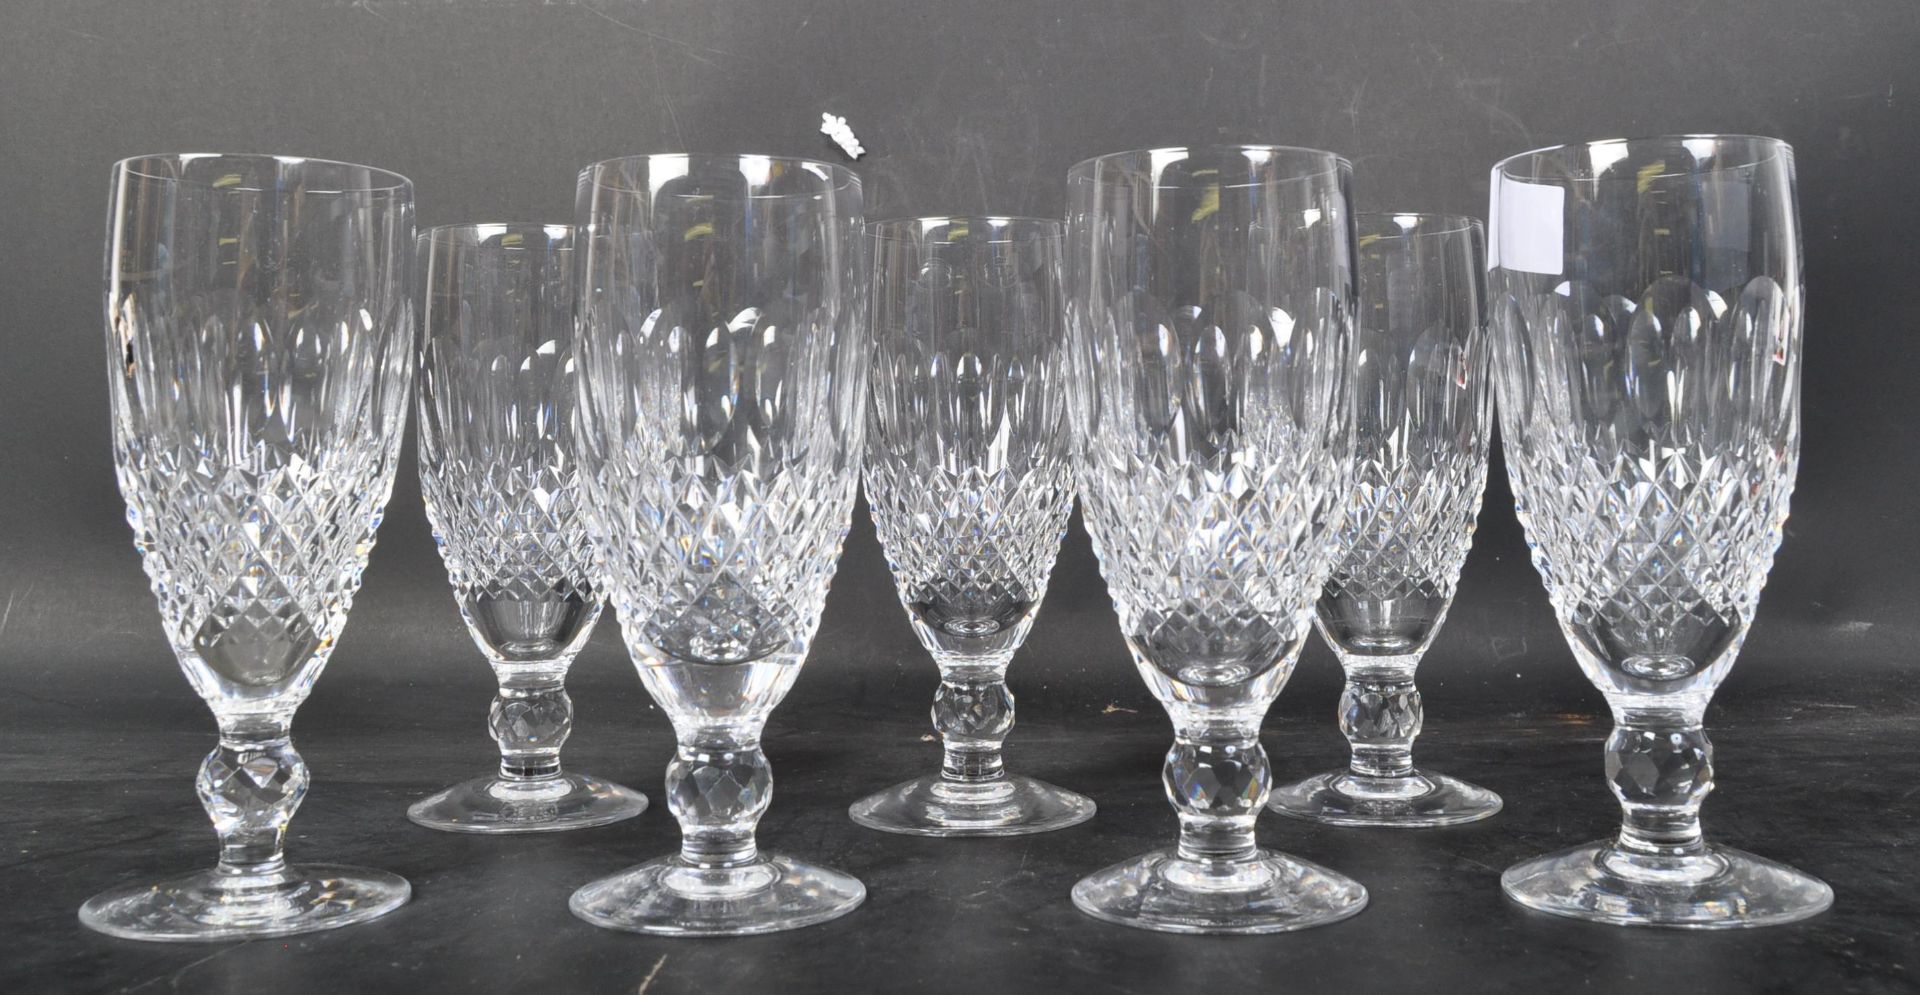 SIX VINTAGE WATERFORD CRYSTAL 'LISMORE' PILSNER GLASSES - Image 2 of 5